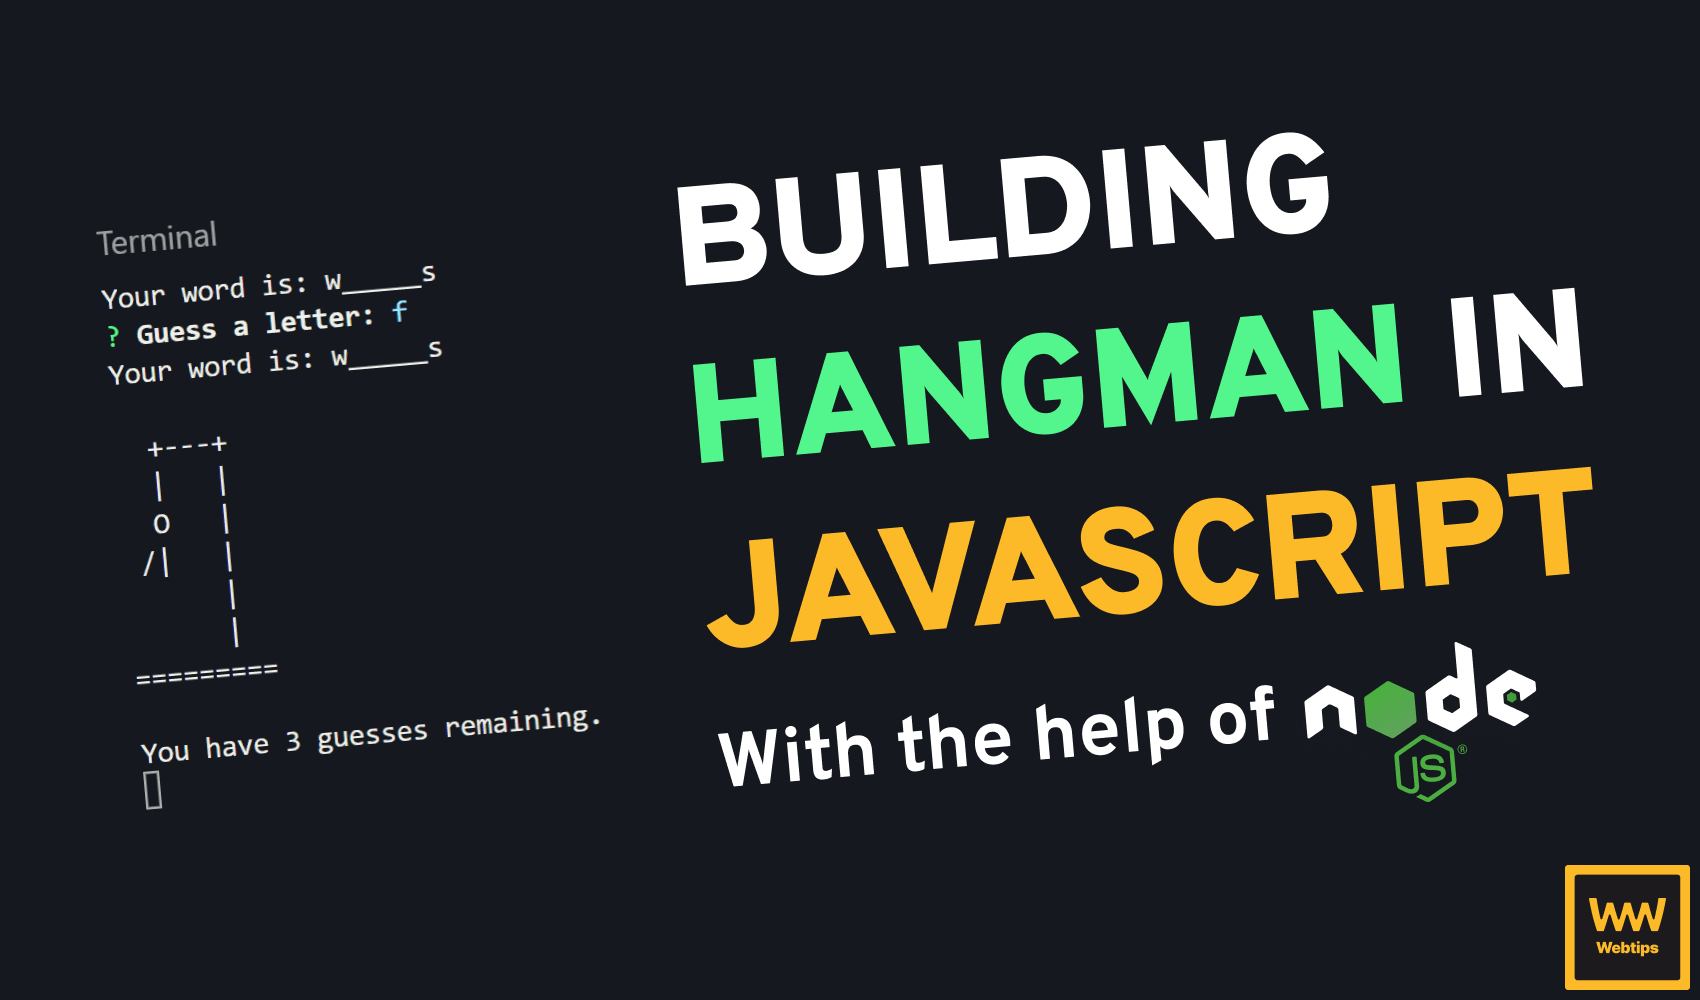 Hangman created in JavaScript